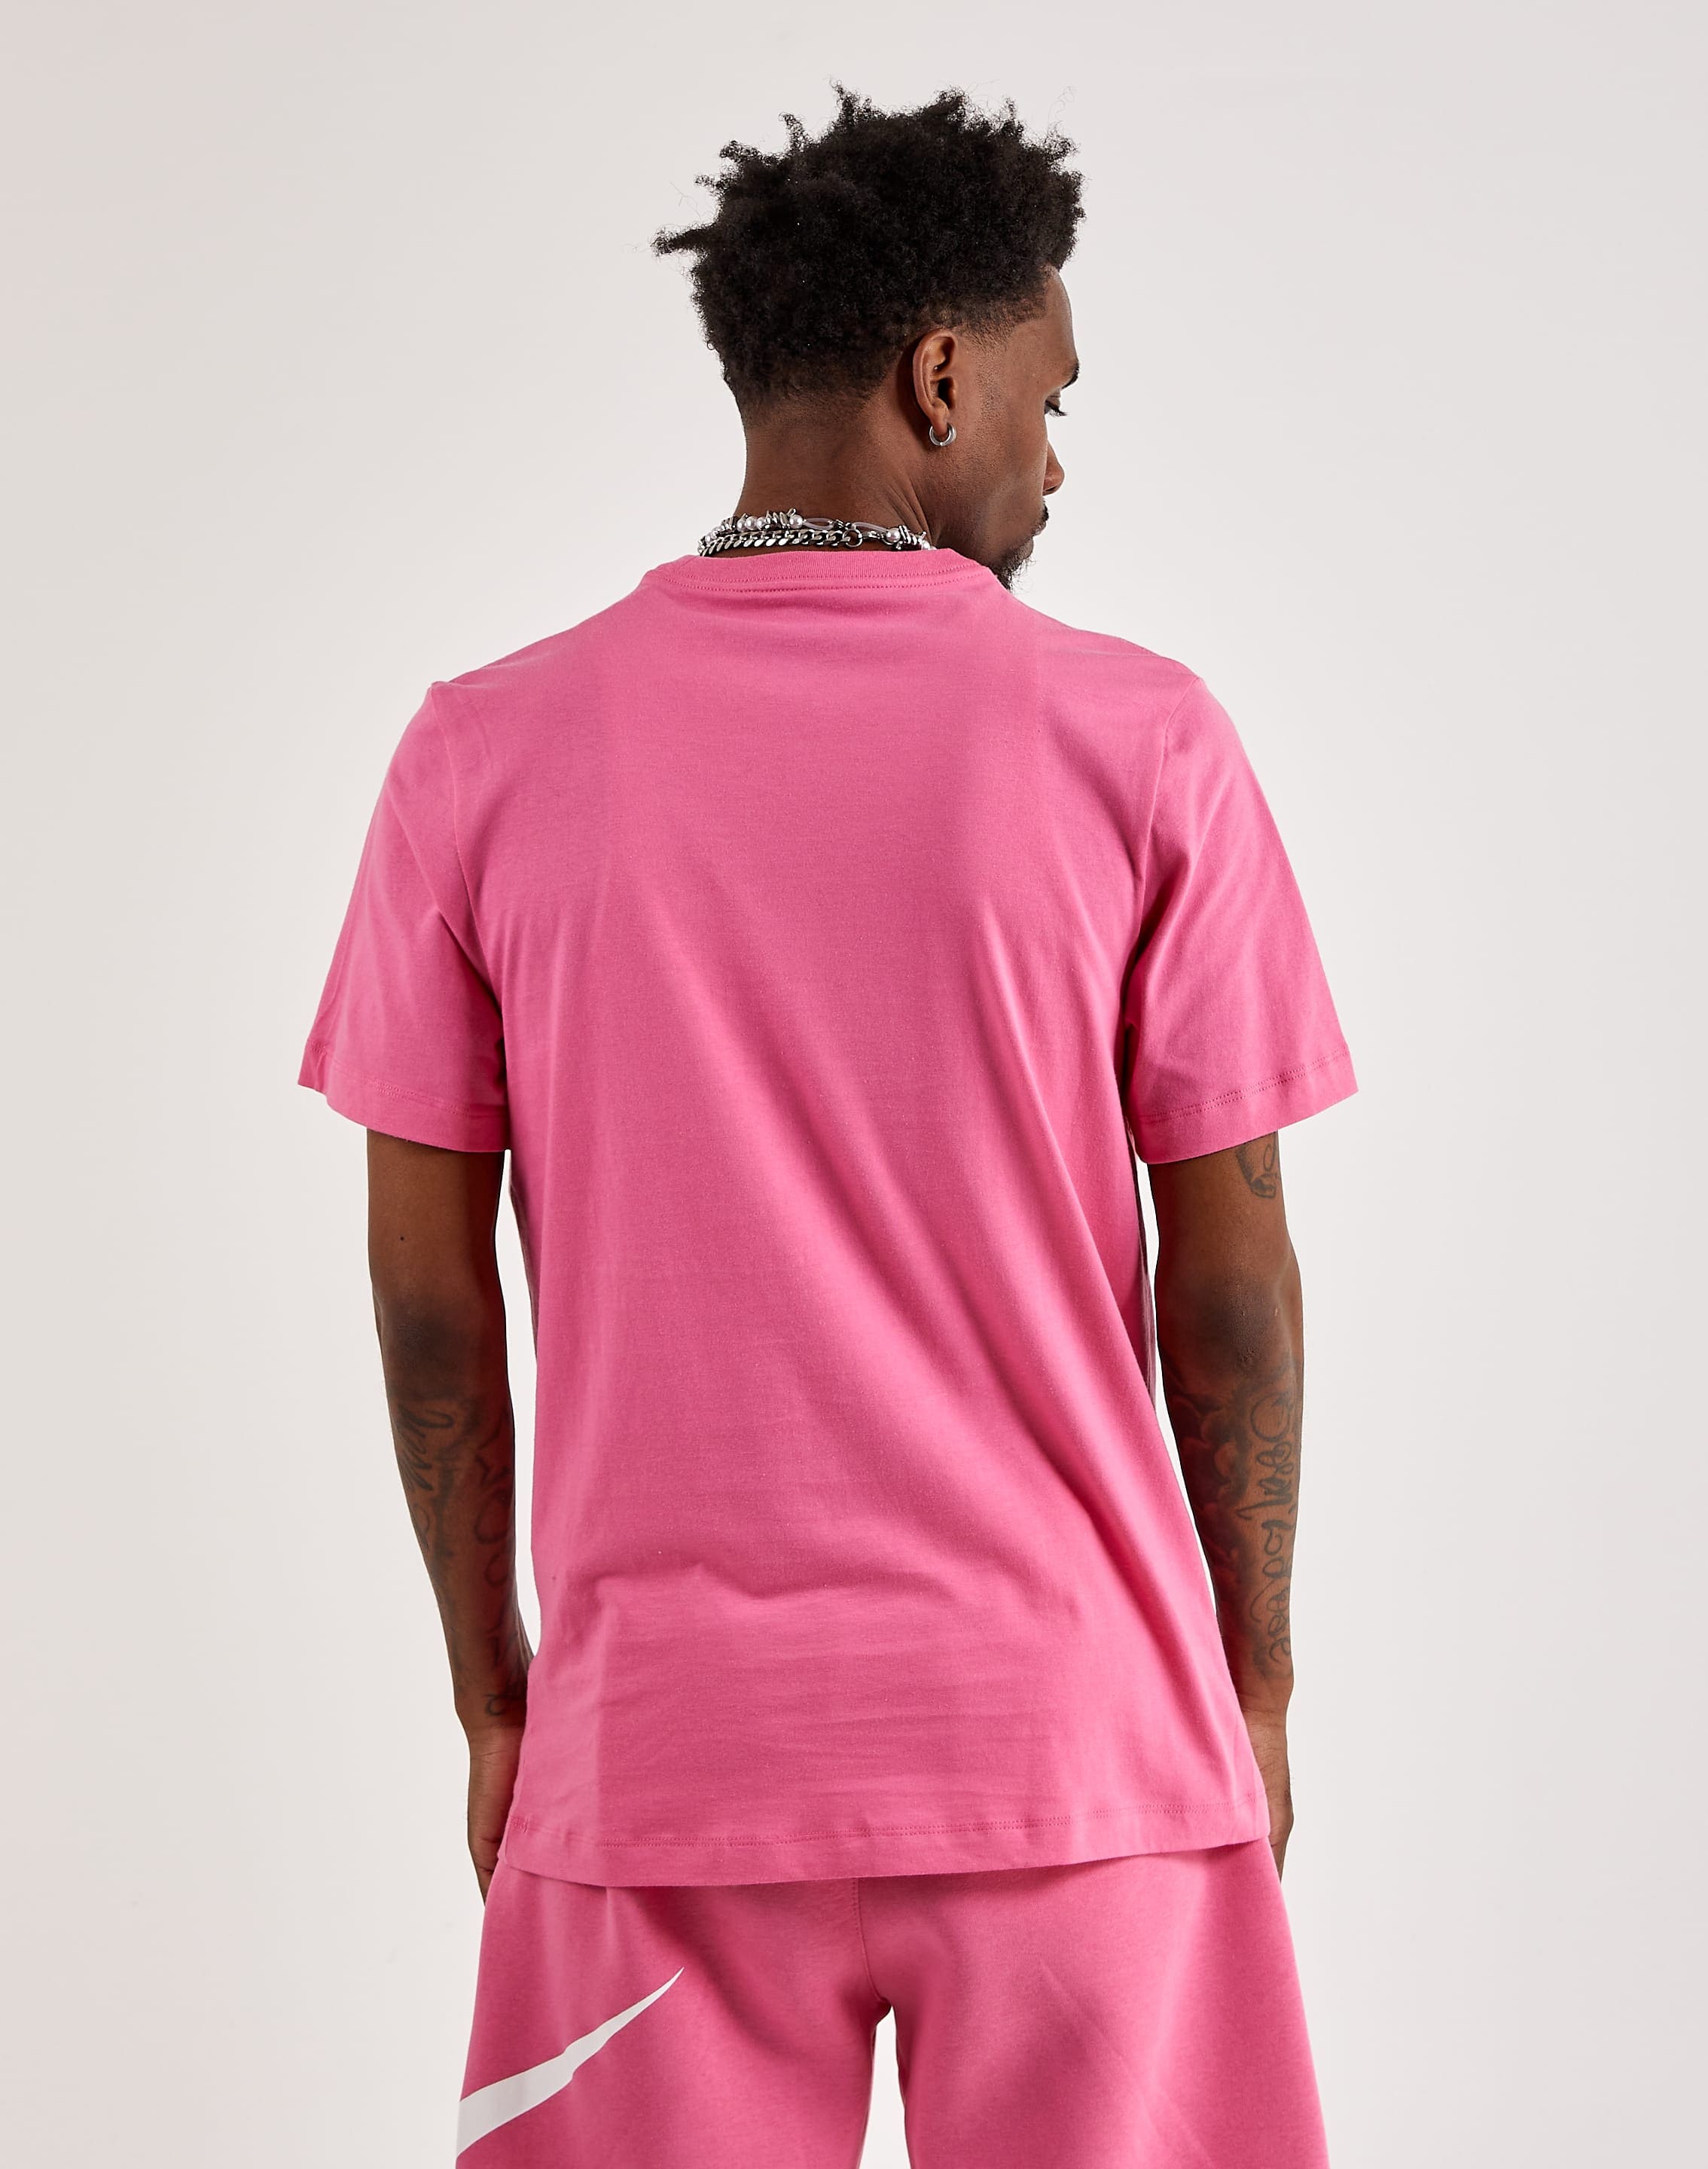 NIKE - Camiseta rosa AR4997 685 Hombre